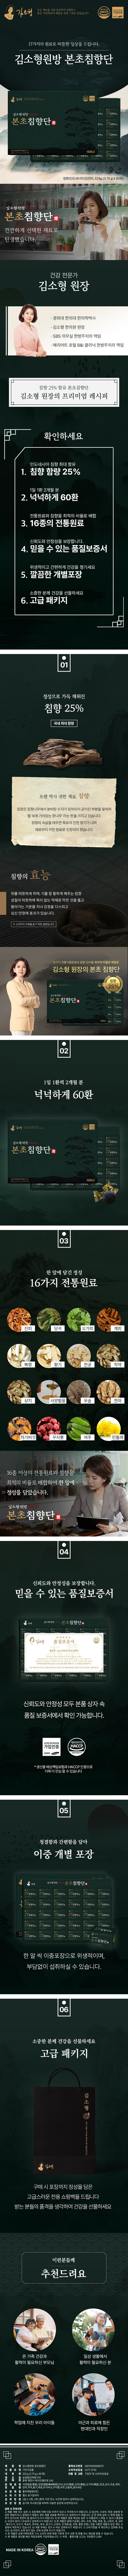 kimsohyung_bonchochim_3.75x60_info.jpg